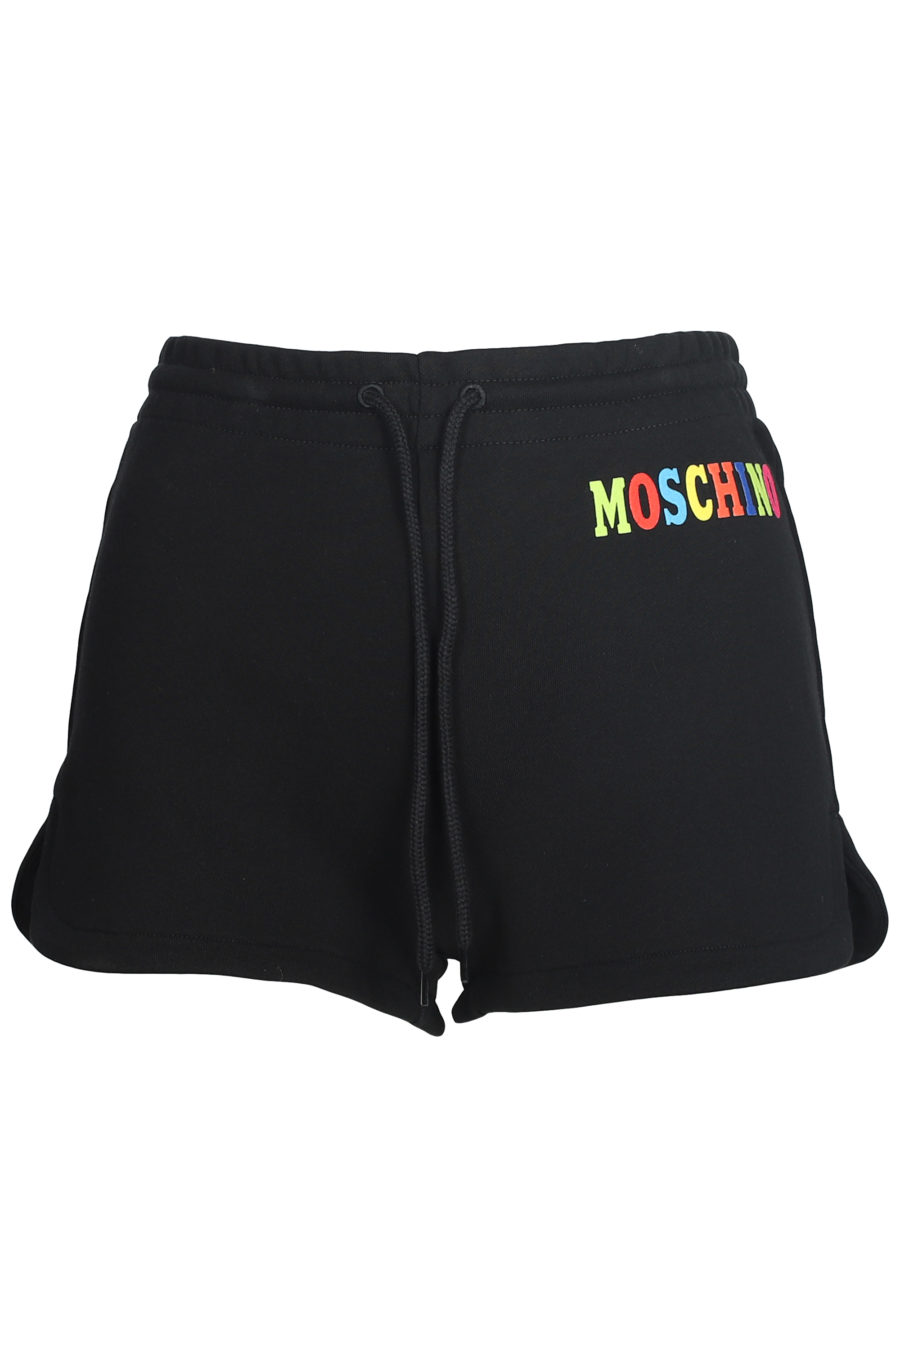 Schwarze Shorts mit farbigem Logo - IMG 5601